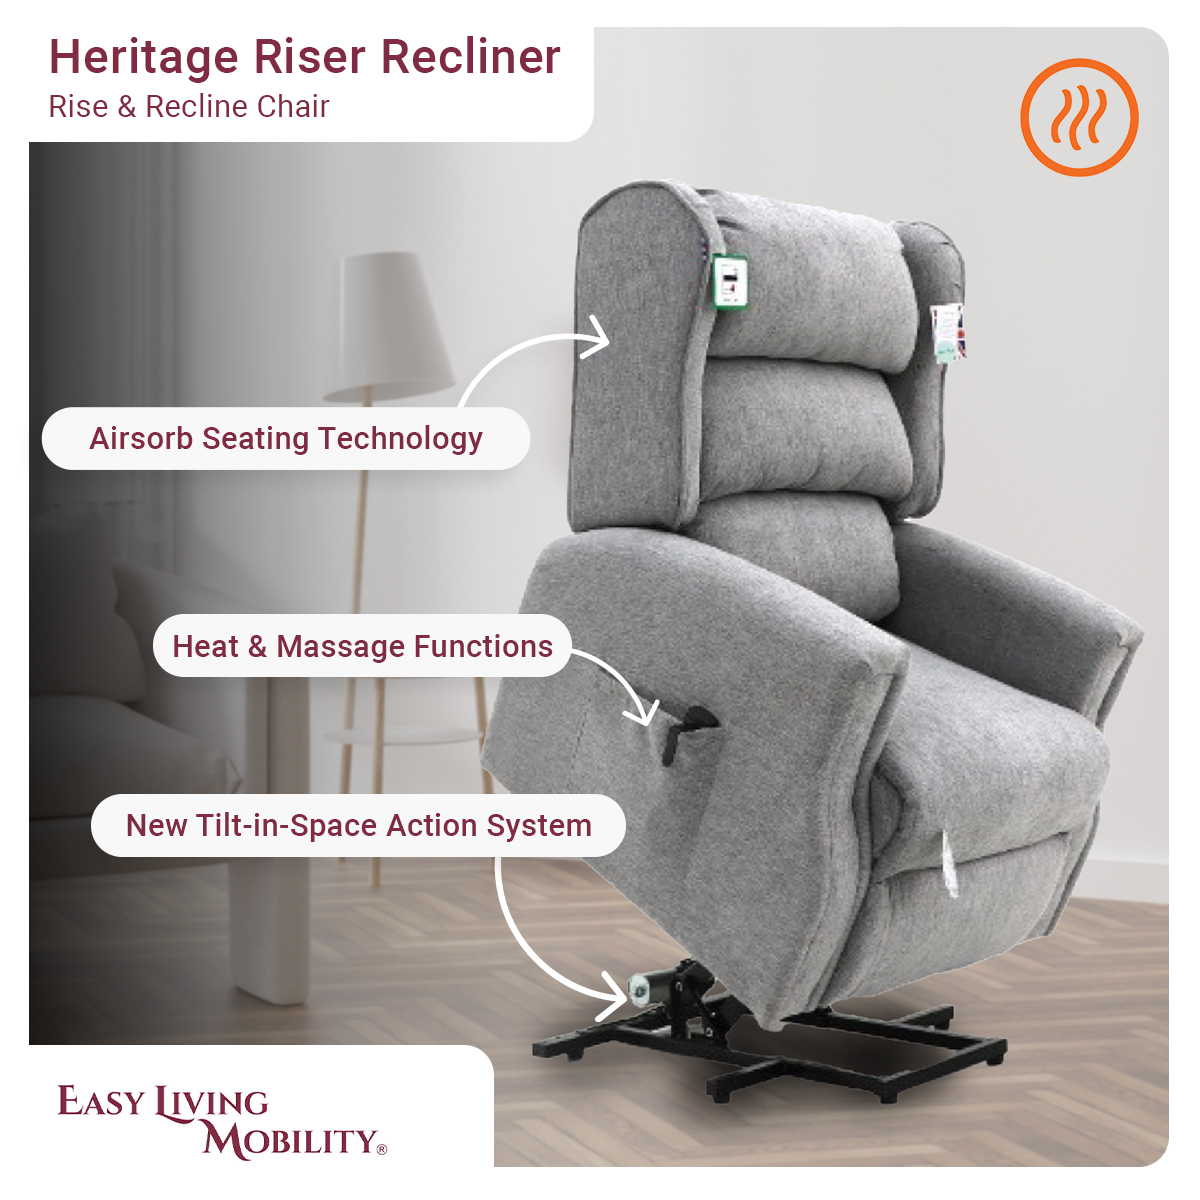 Heritage Riser Recliner with Heat & Massage